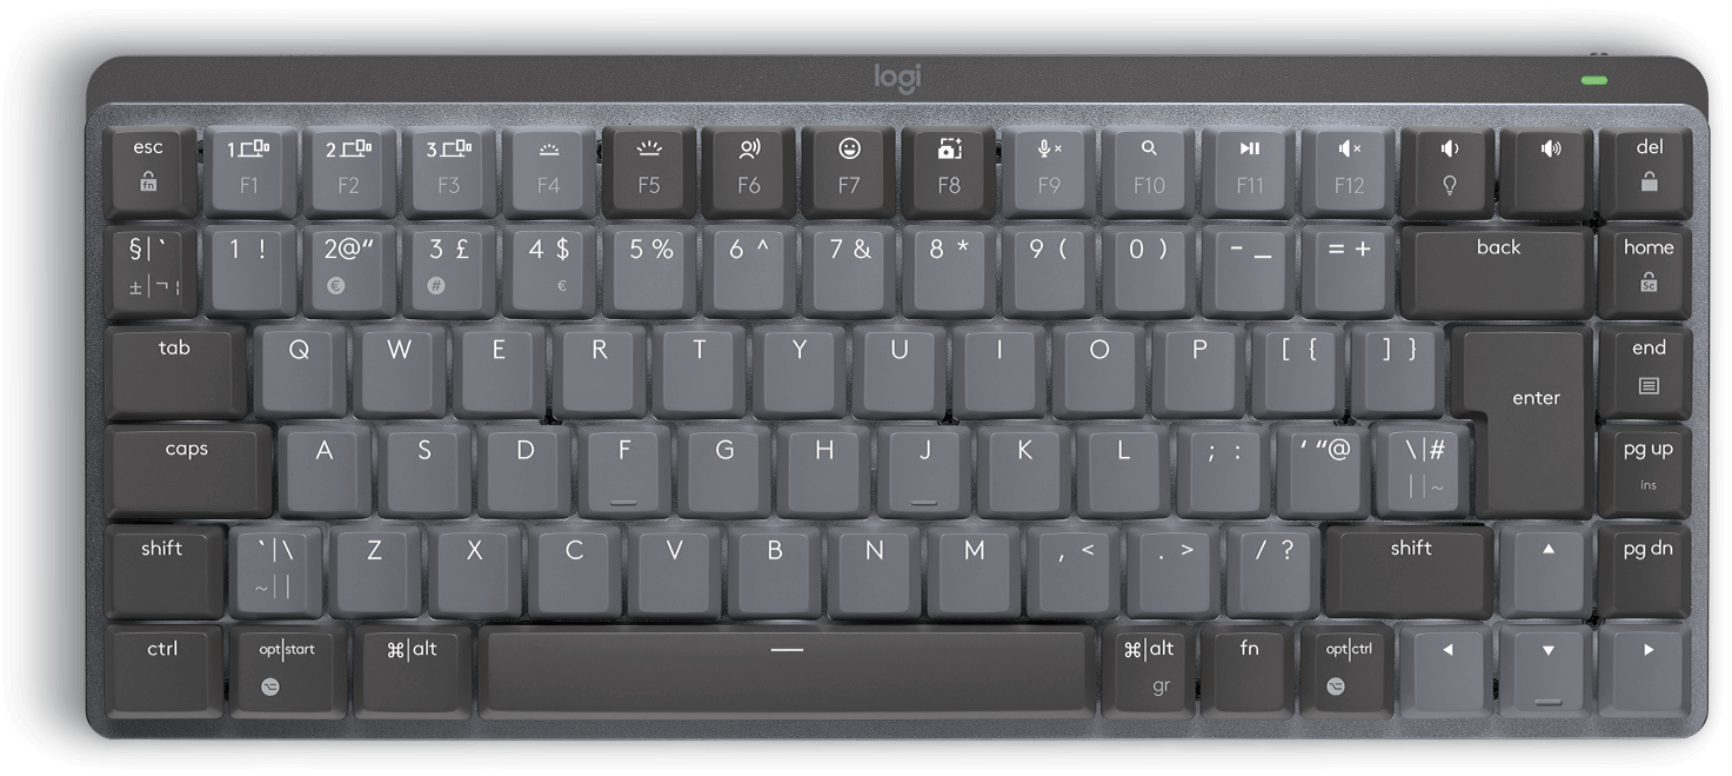 Image: main keyboard